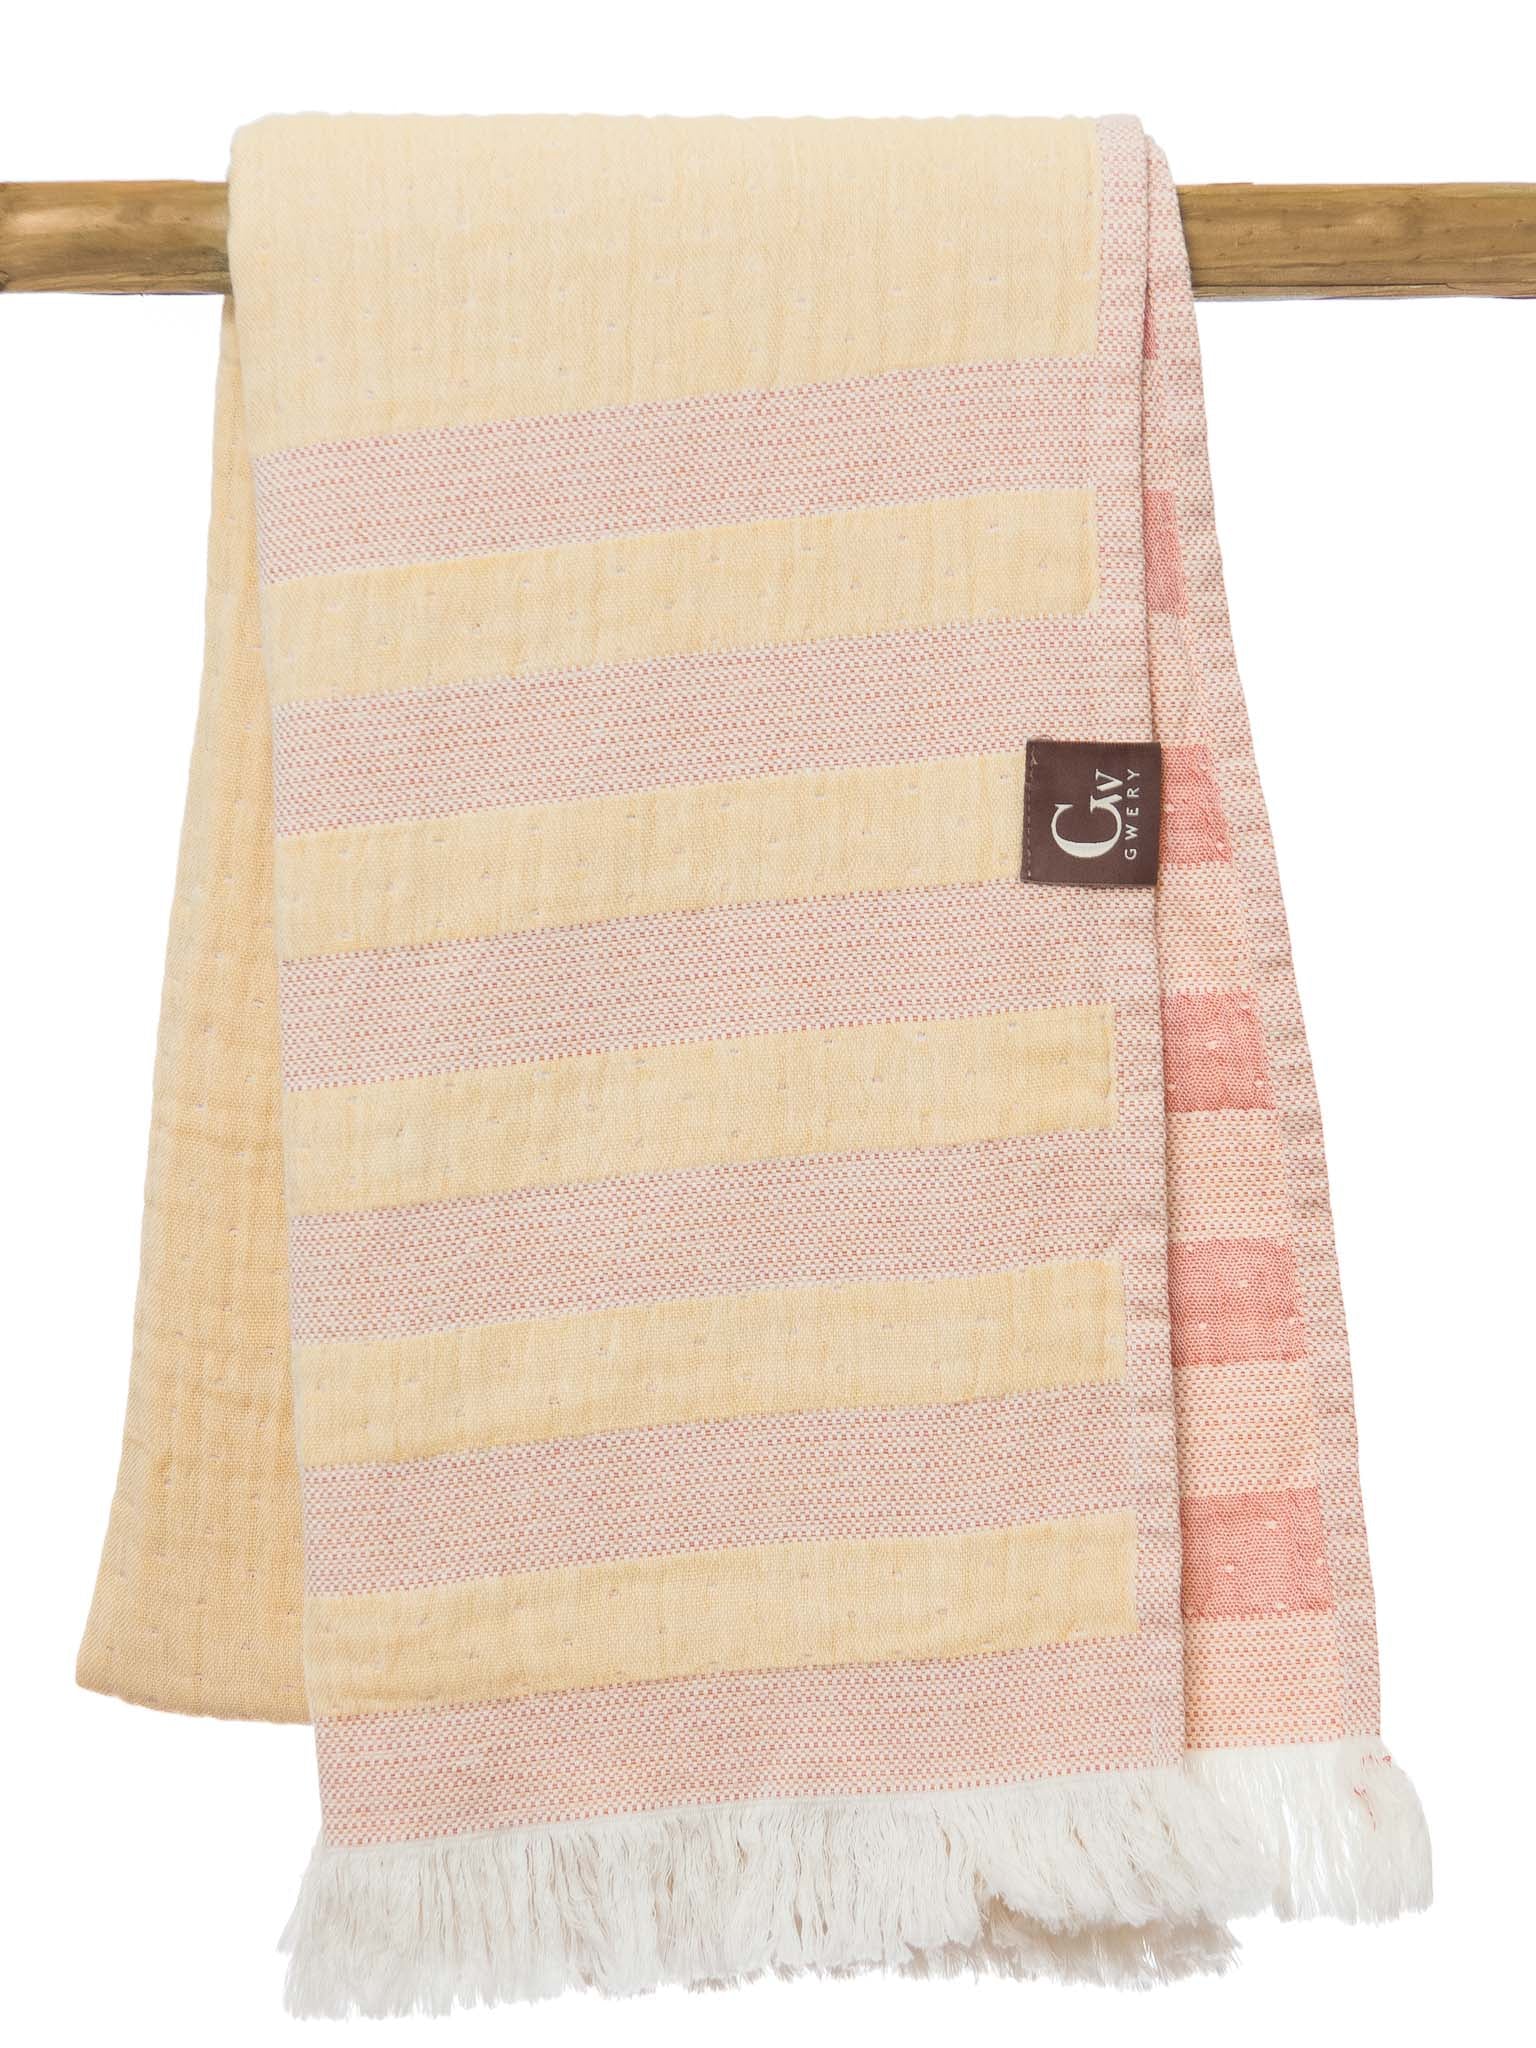 Yellow and orange striped beach towel folded